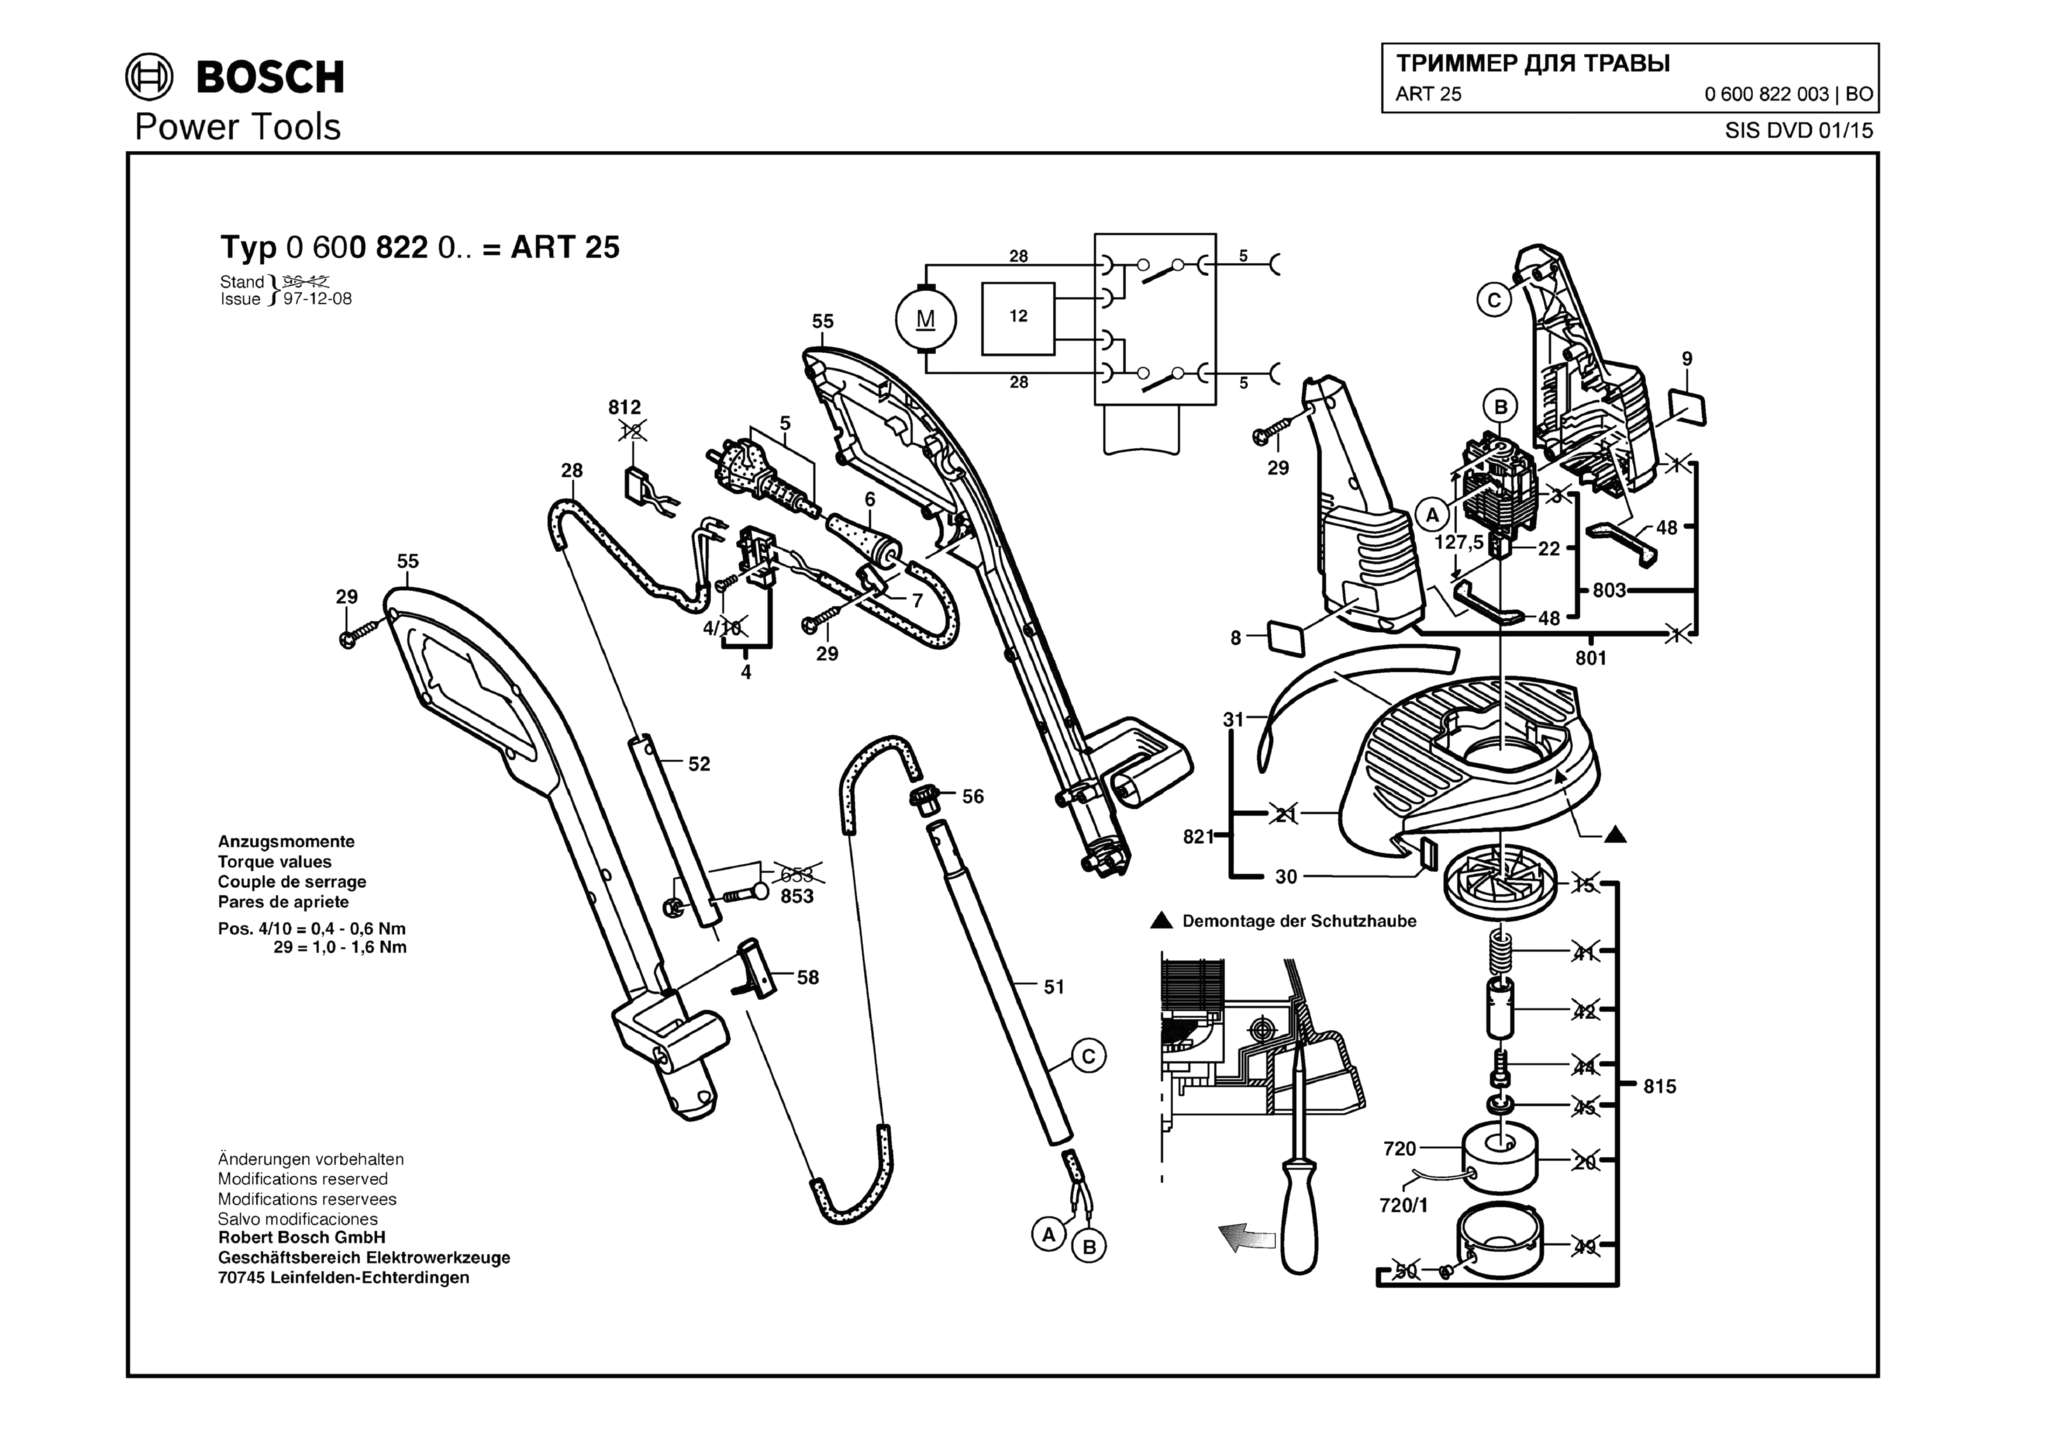 Запчасти, схема и деталировка Bosch ART 25 (ТИП 0600822003)